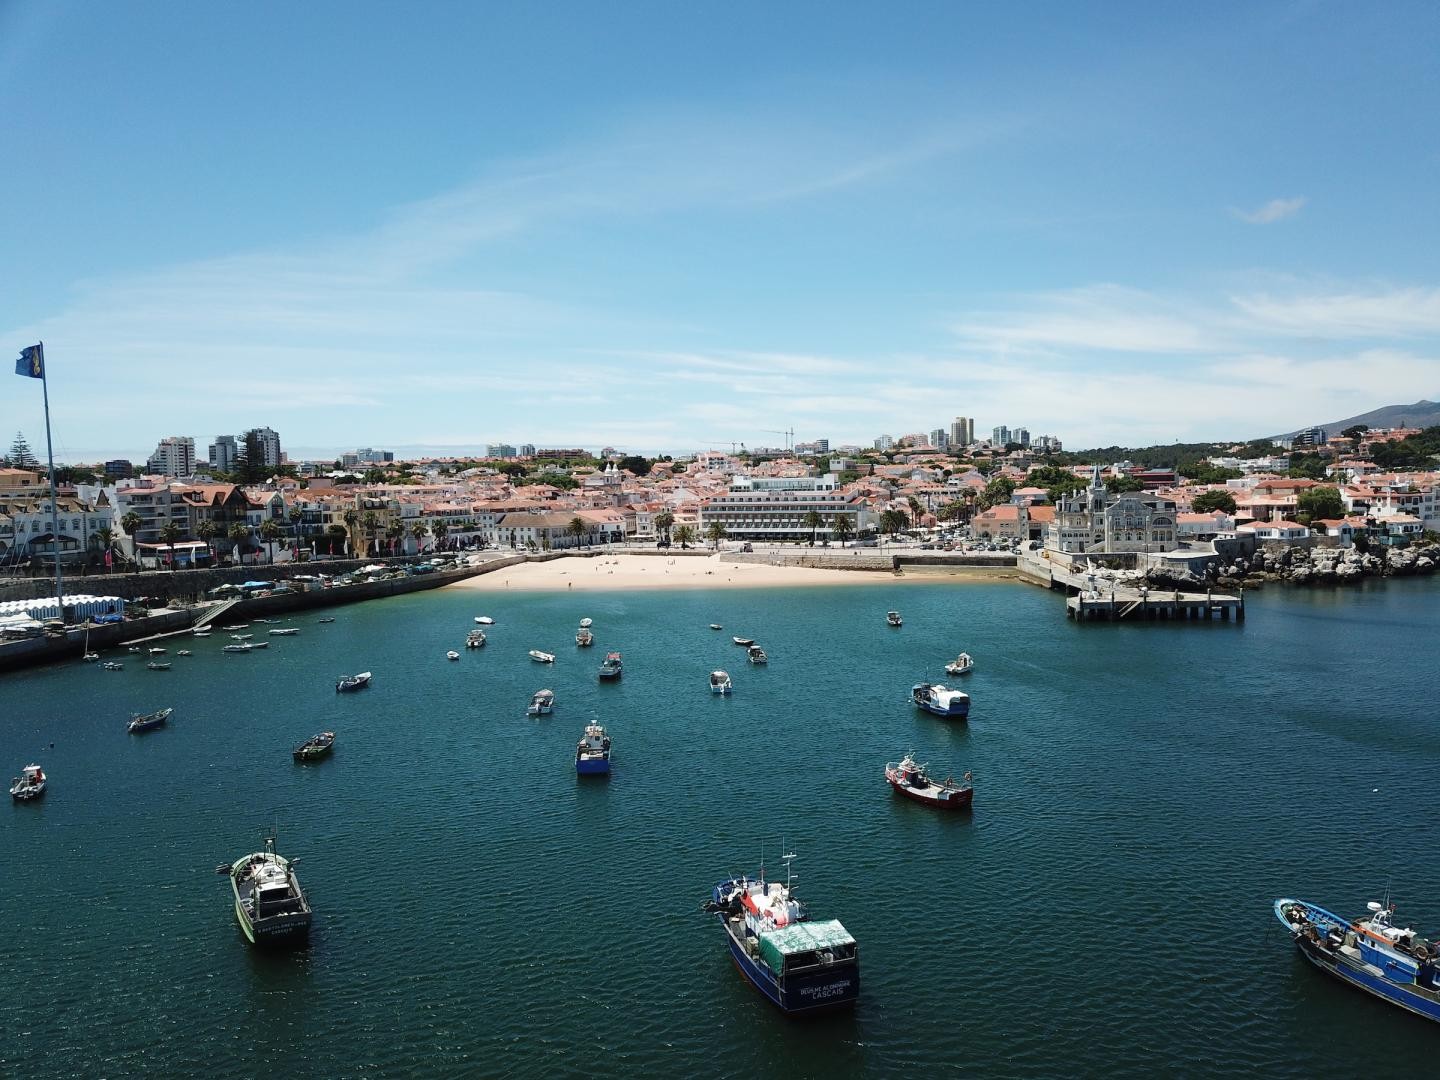 Portugal brings its charm to hosting The Ocean Race Europe in June